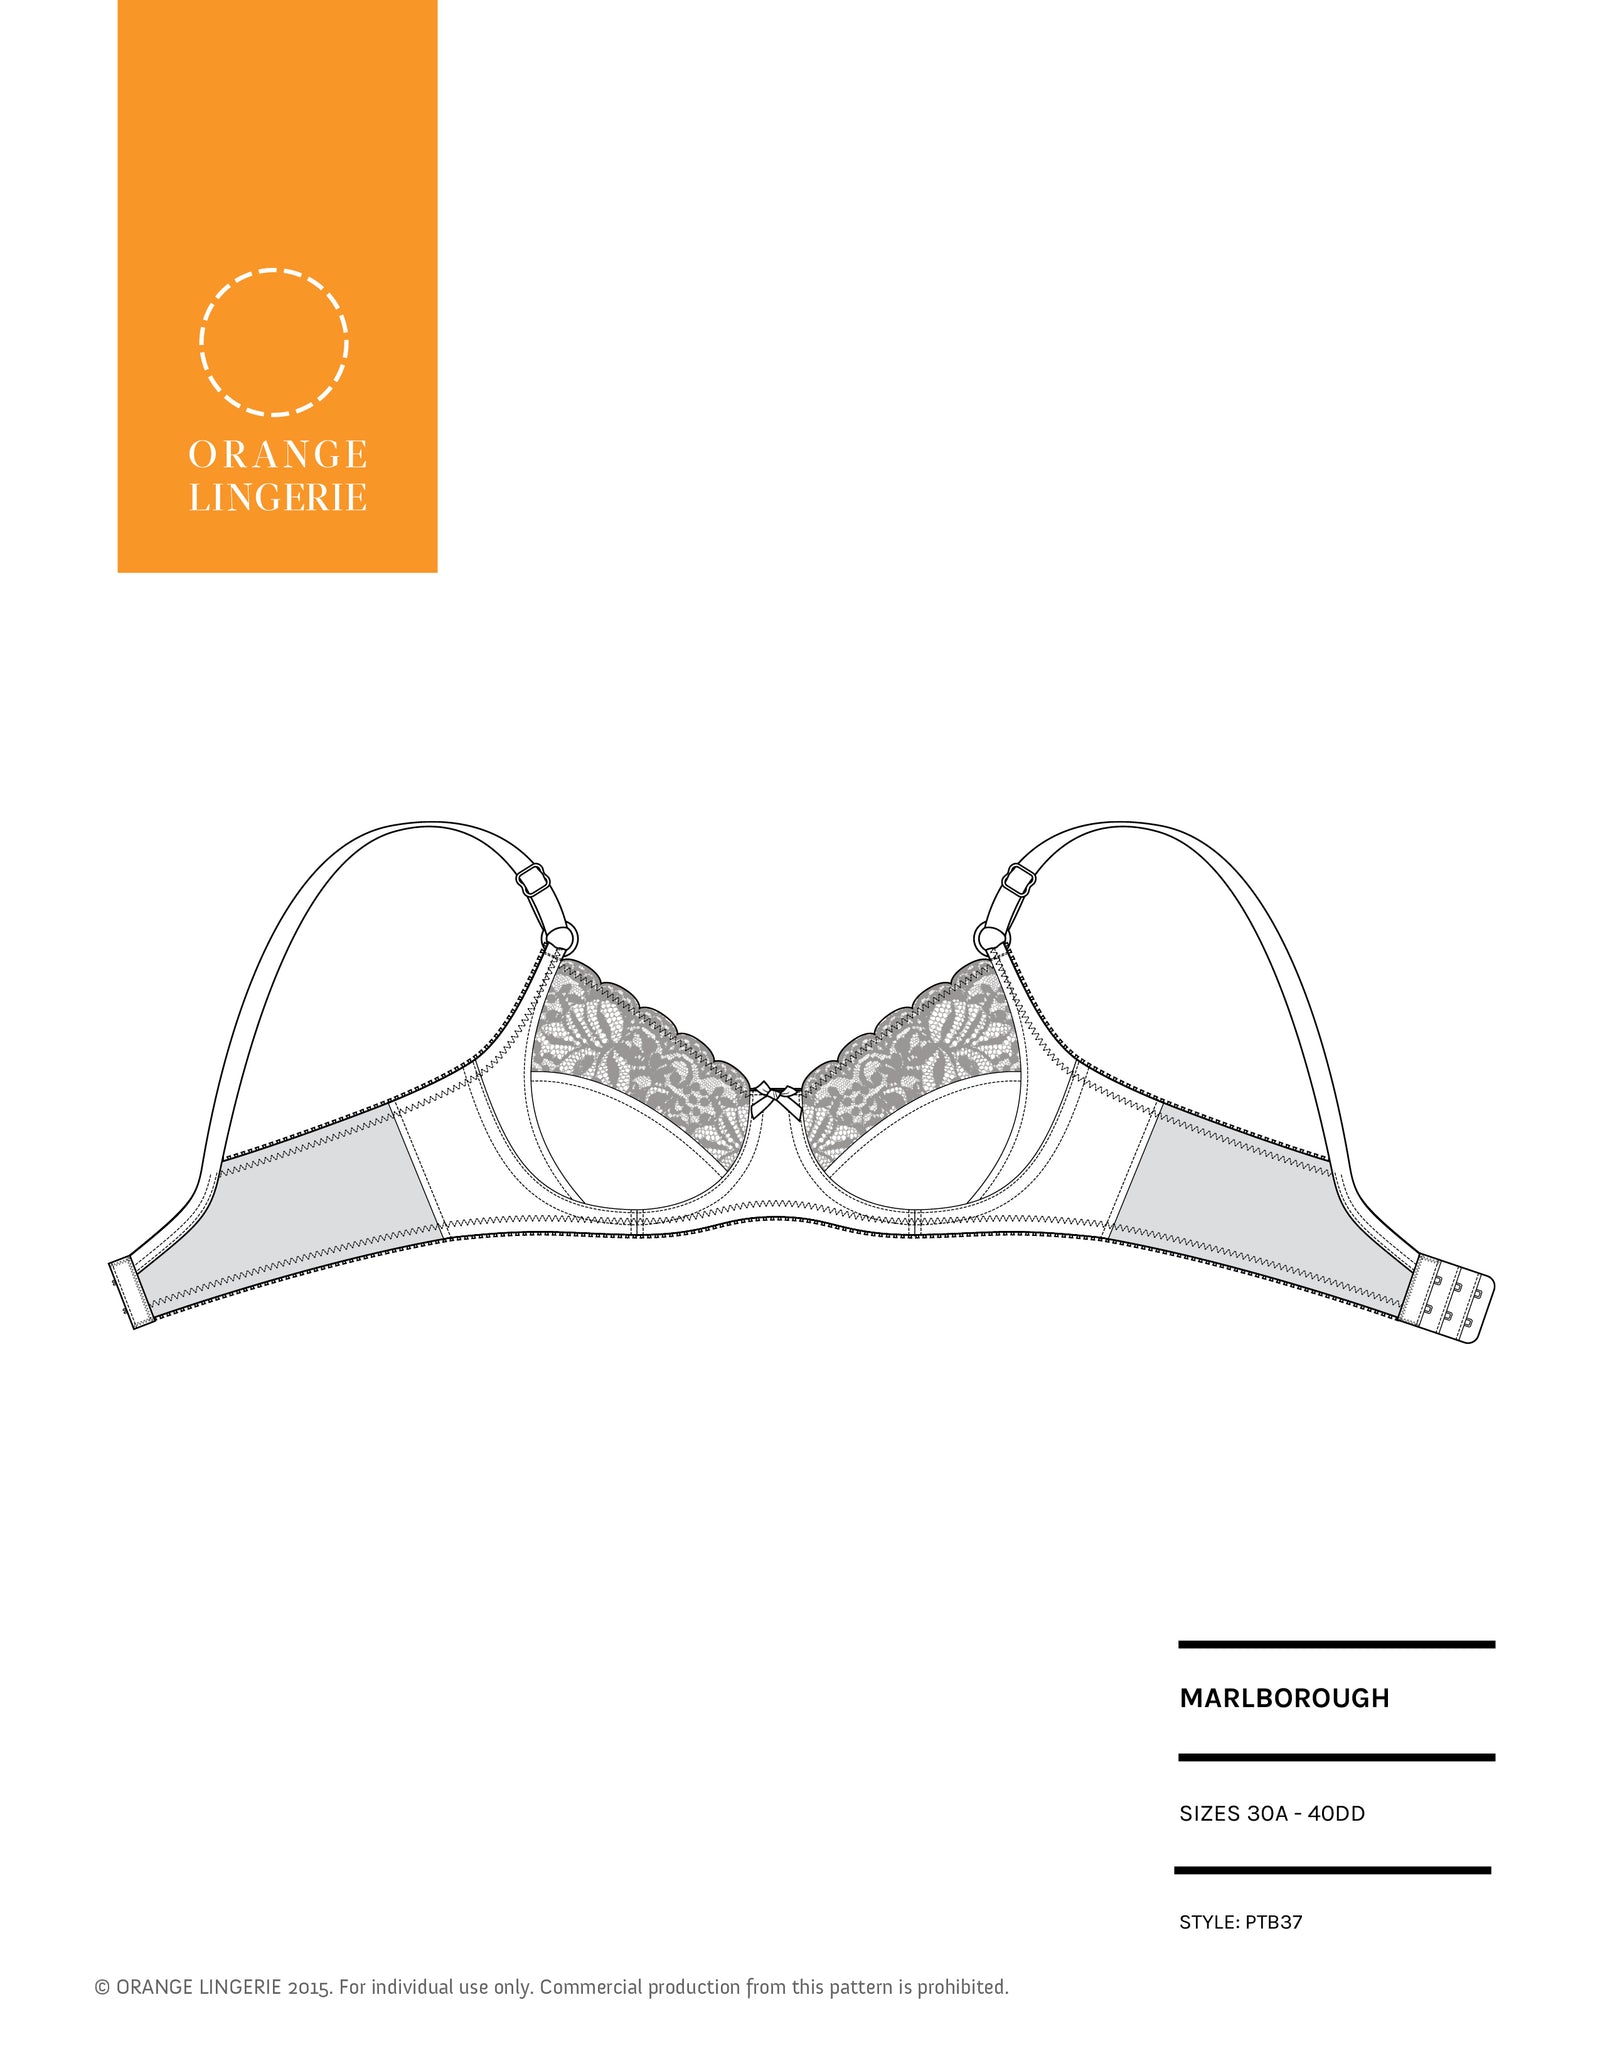 Berkeley bra - The Fold Line